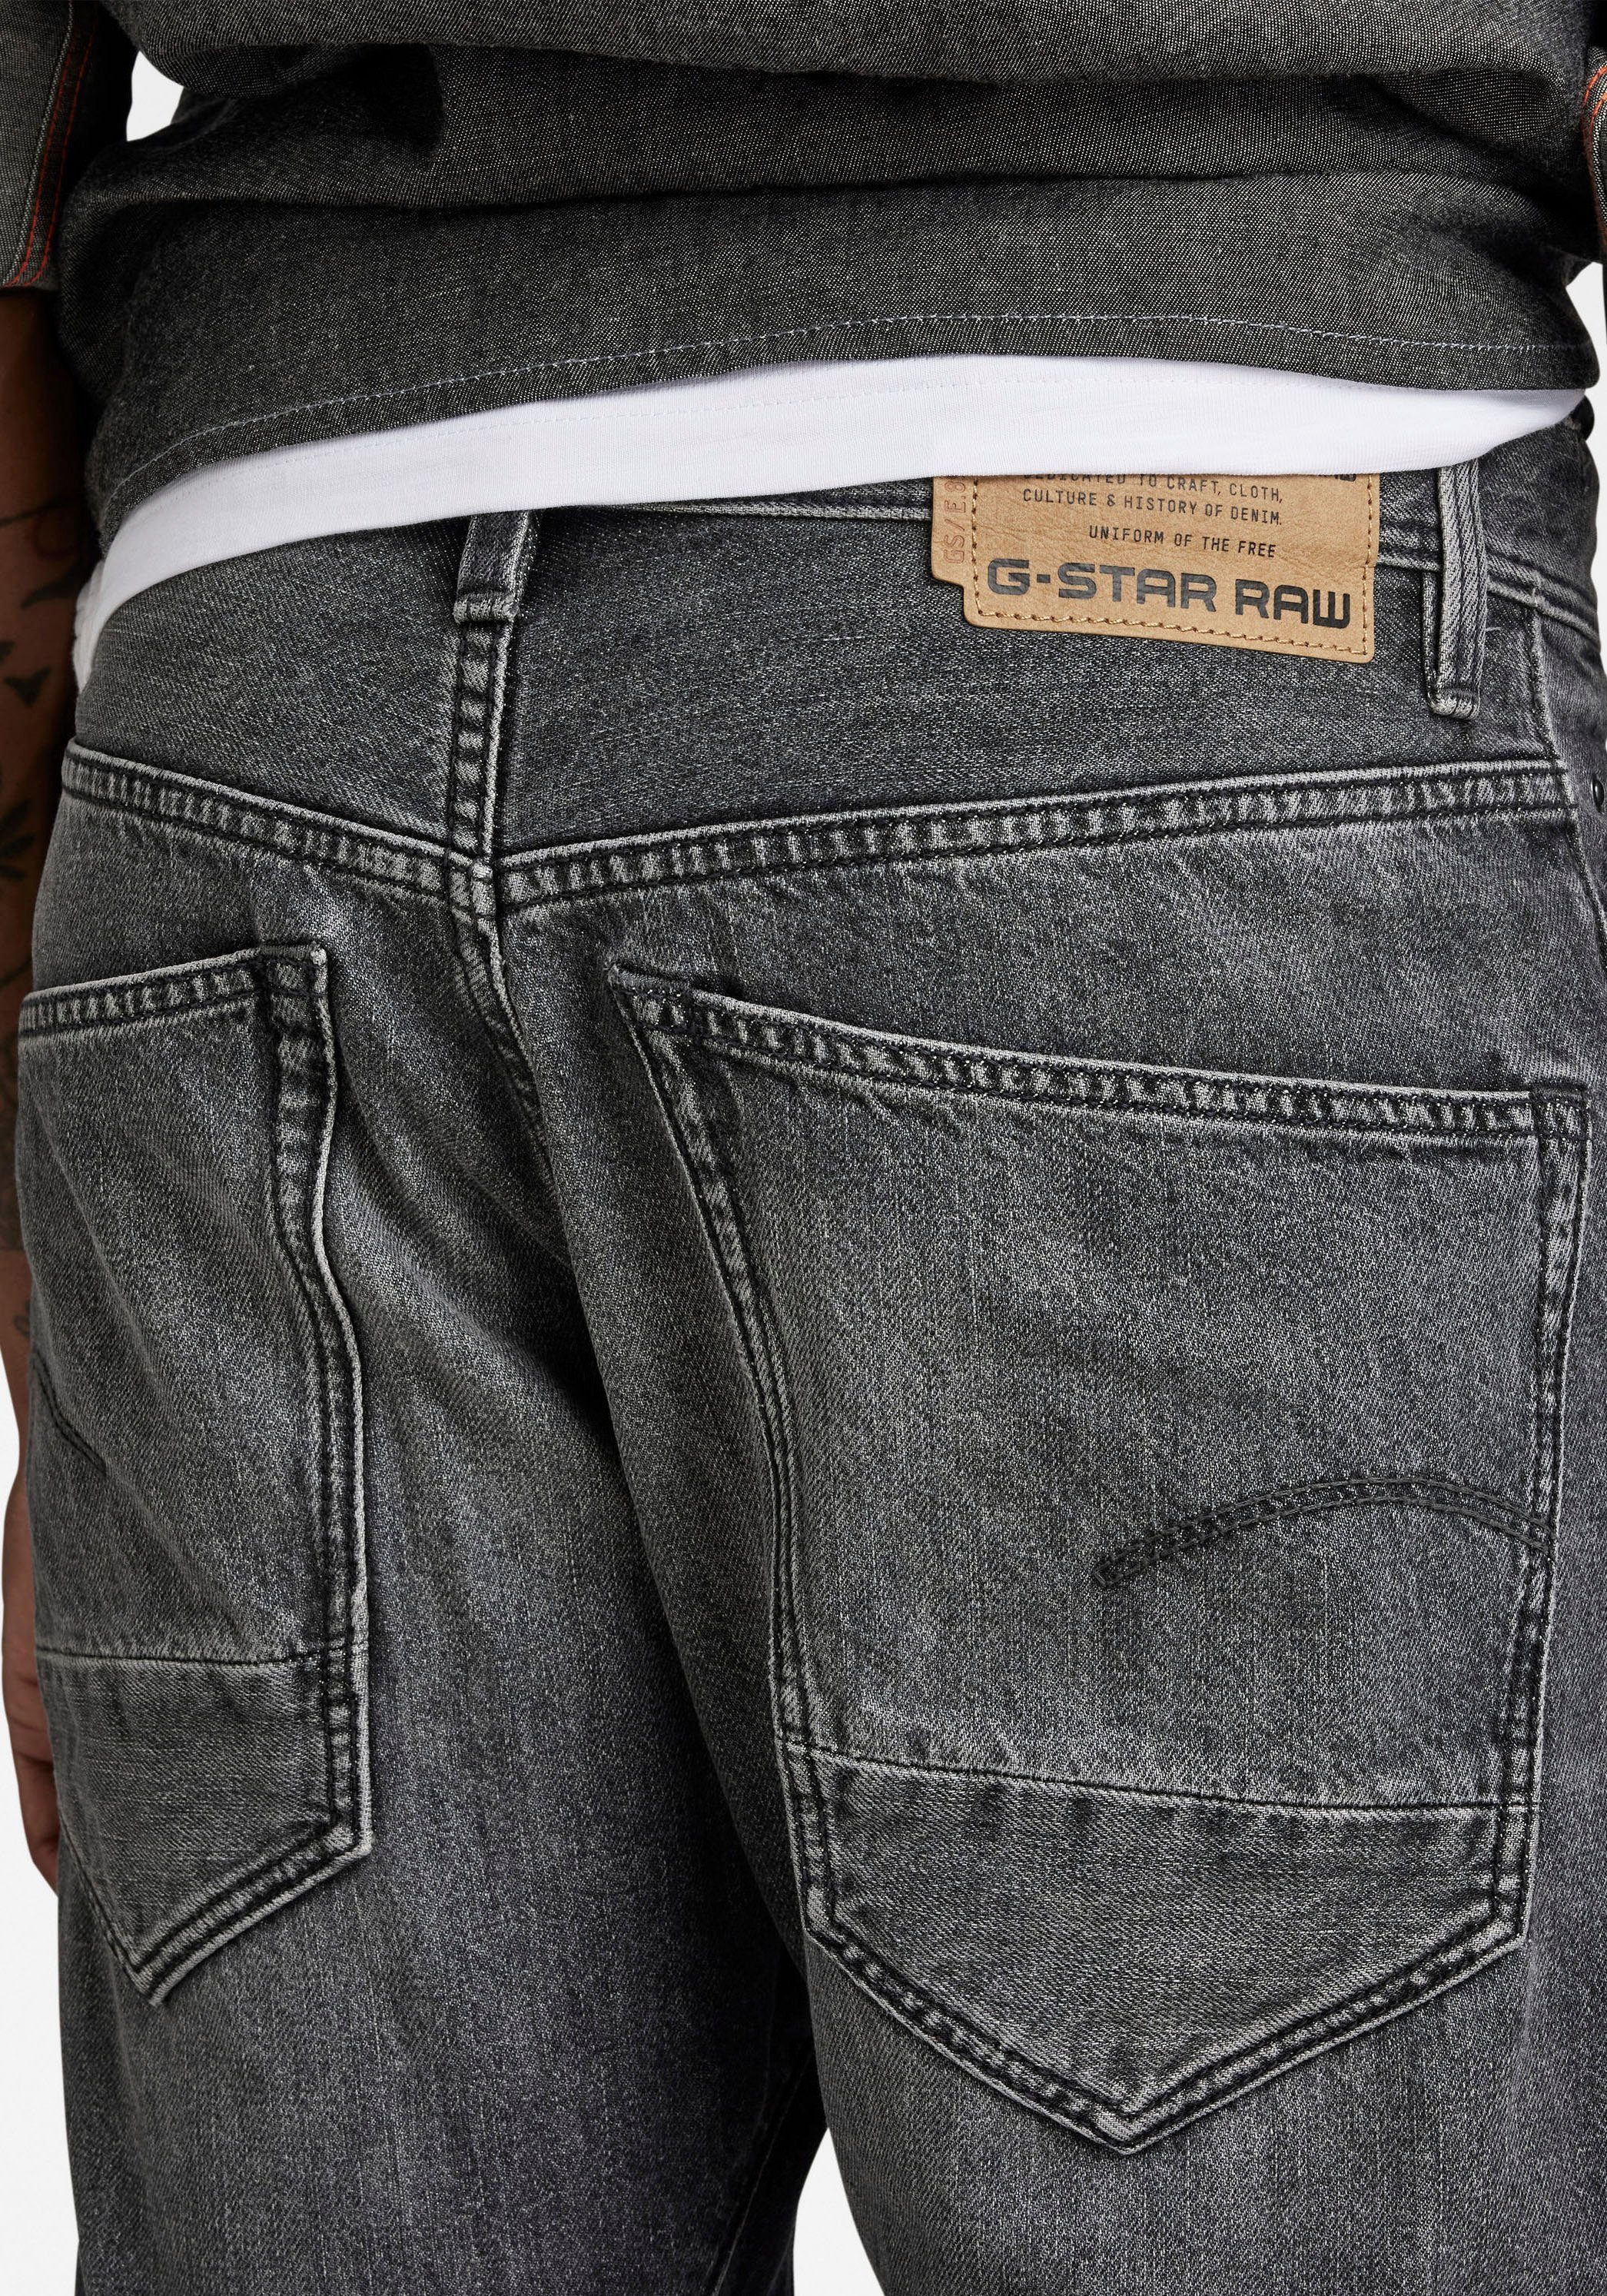 G-Star faded Jeans Slim-fit-Jeans 3D moonlit RAW Antique Arc